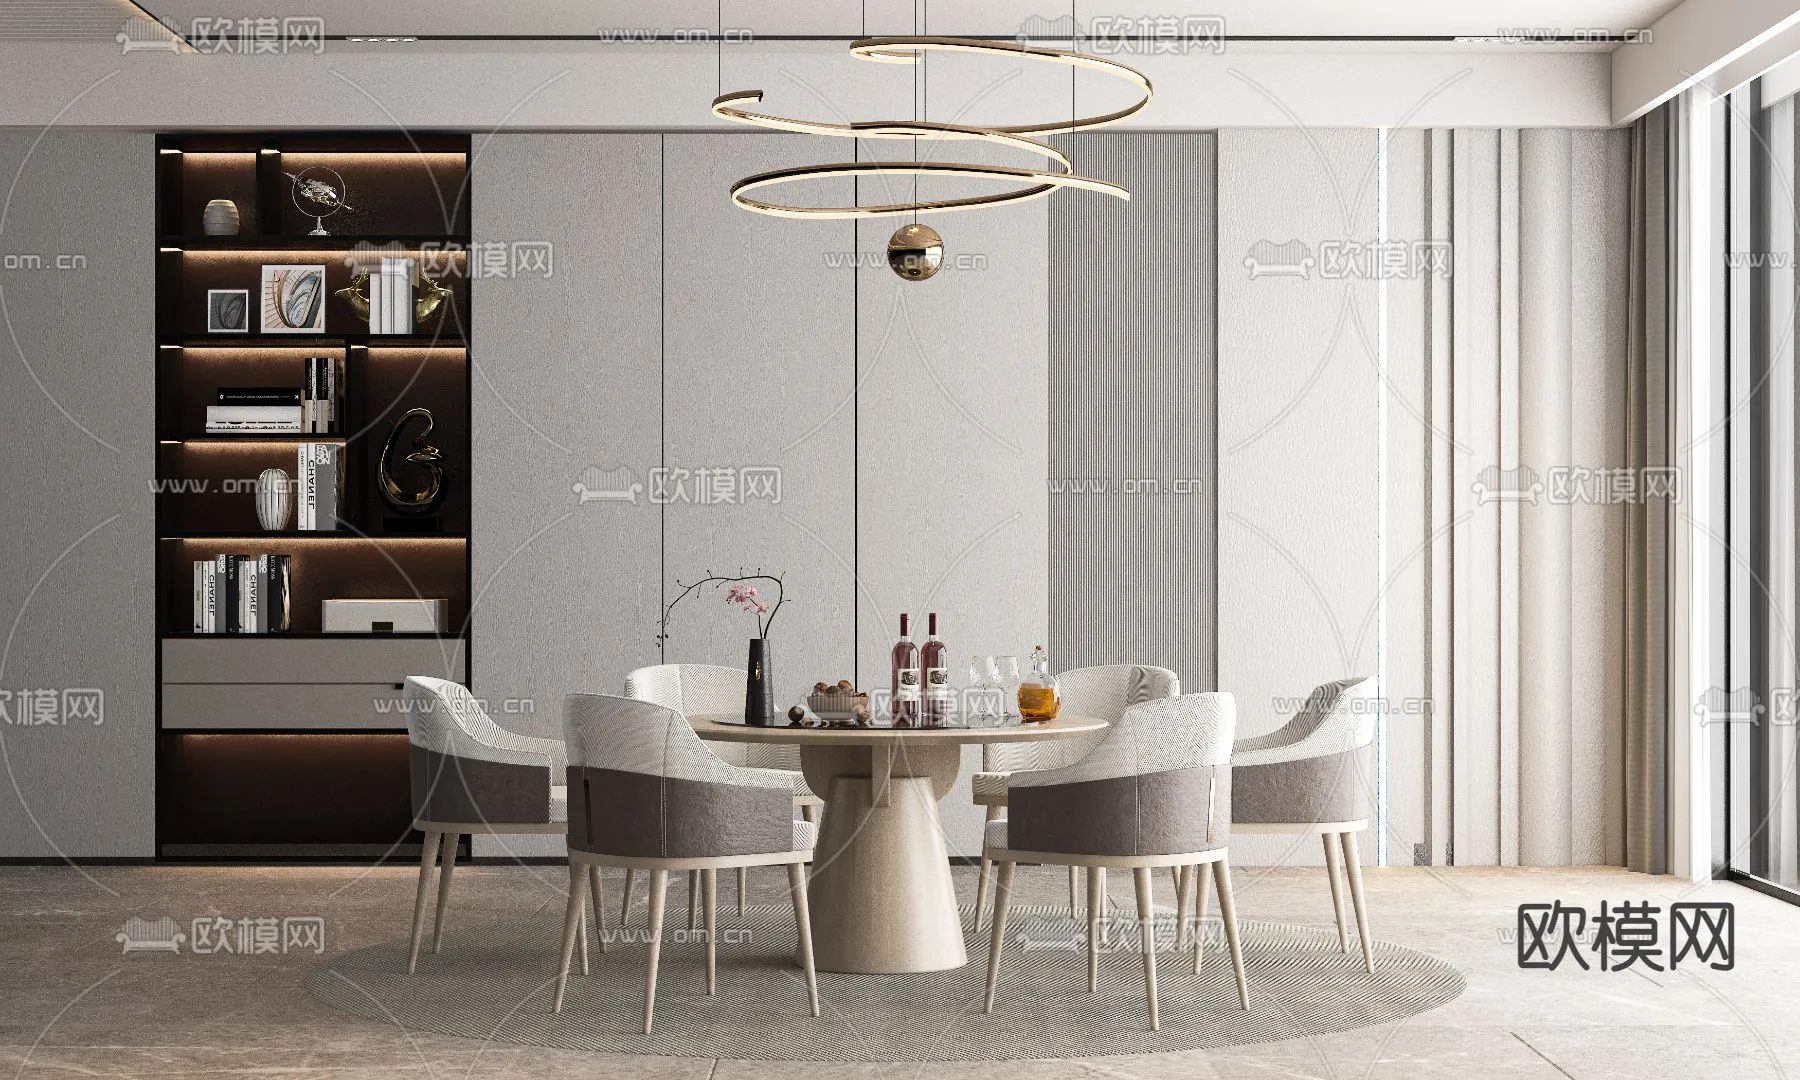 DINING ROOM SETS – VRAY / CORONA – 3D MODEL – 1407